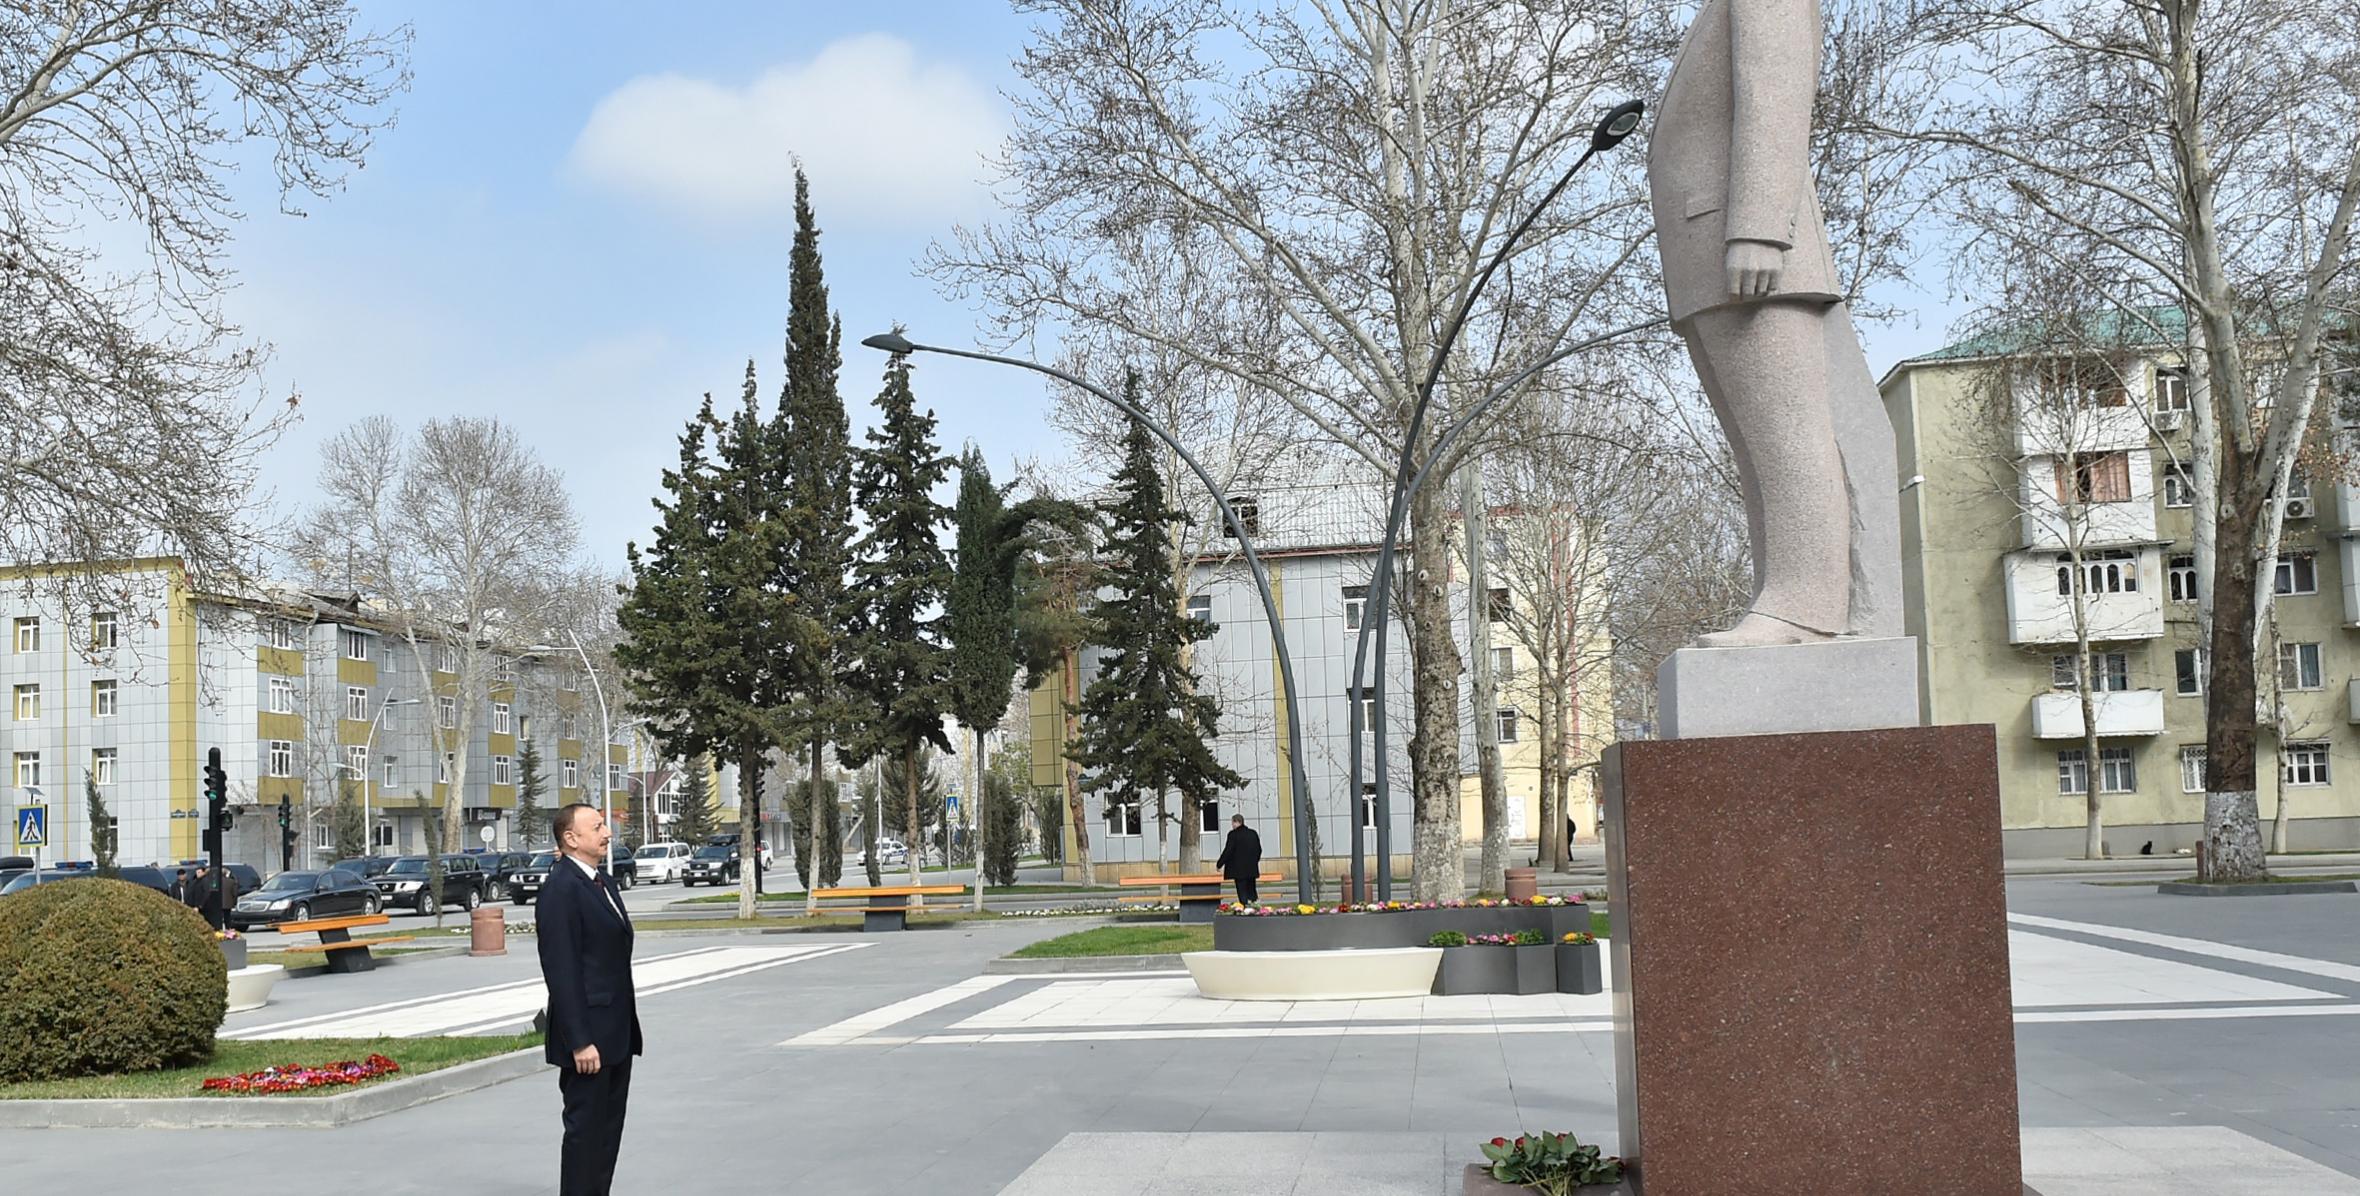 Ilham Aliyev visited a statue of national leader Heydar Aliyev in Mingachevir